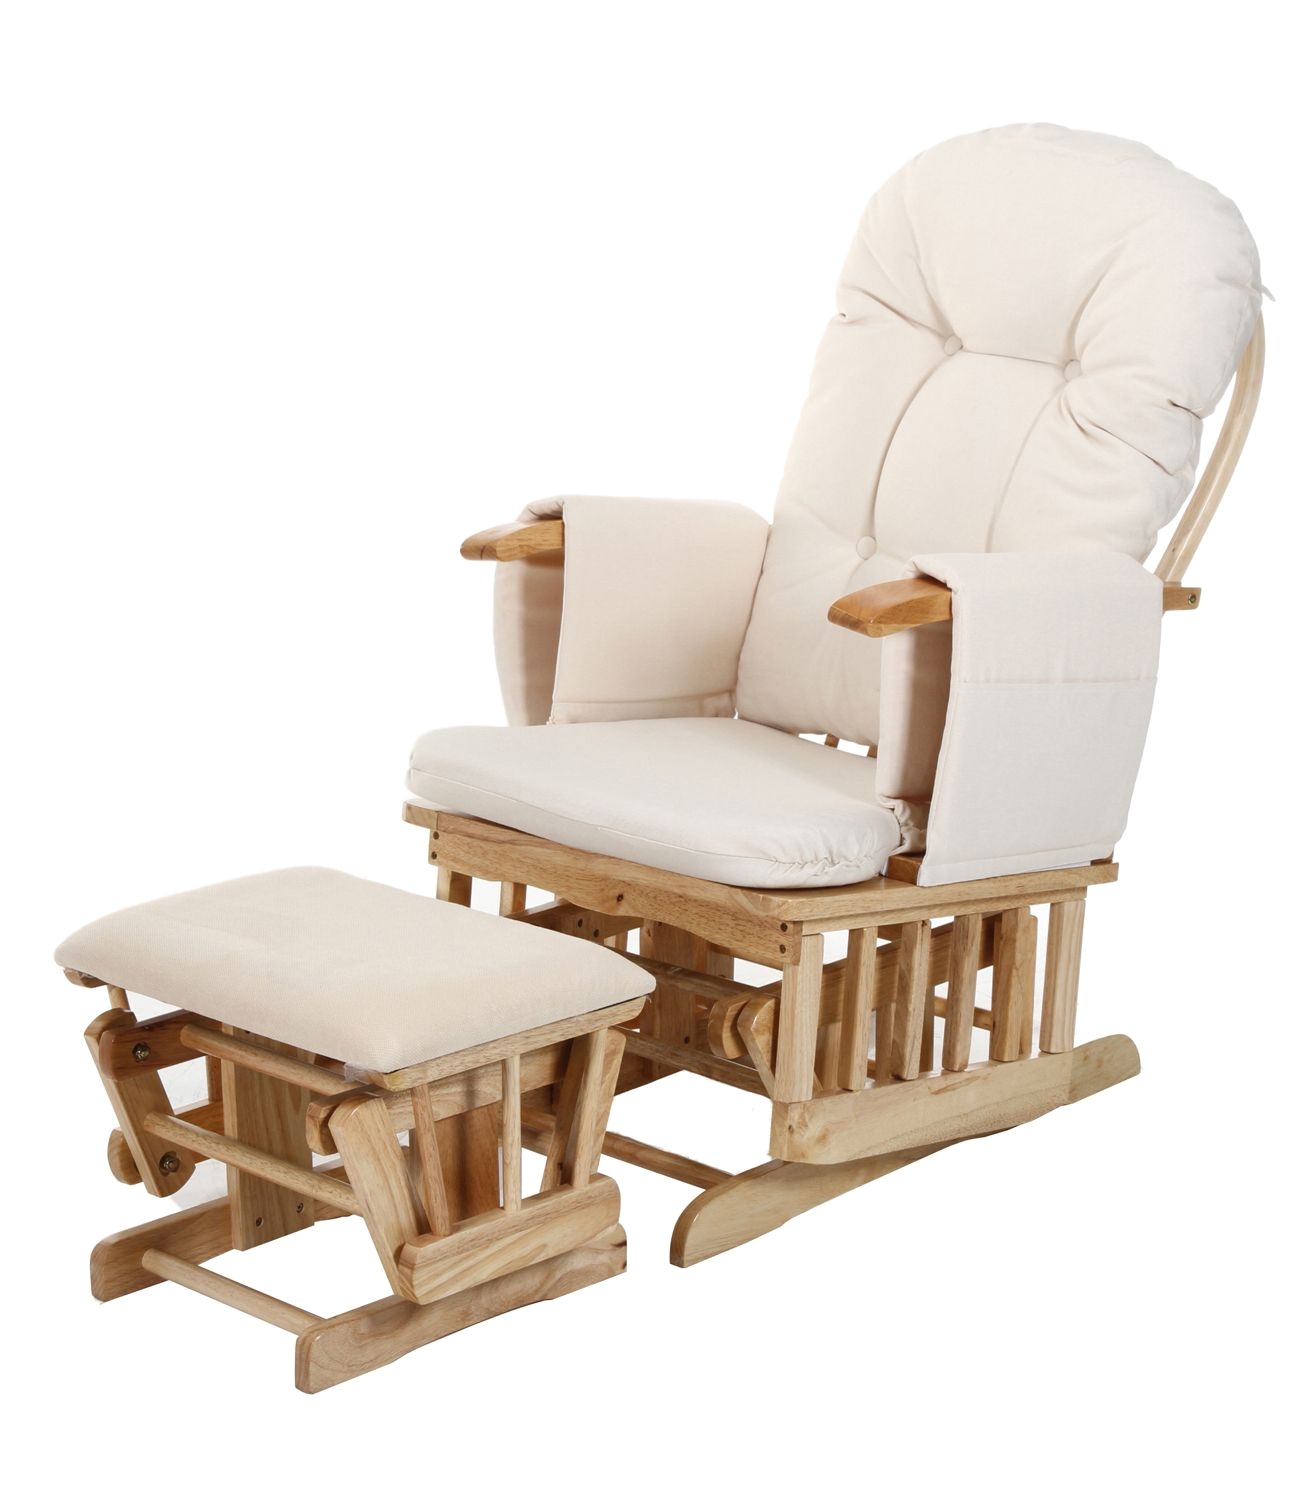 Nursing Rocking Chair toys R Us Buy Your Baby Weavers Recline Glider Stool From Kiddicare Nursing